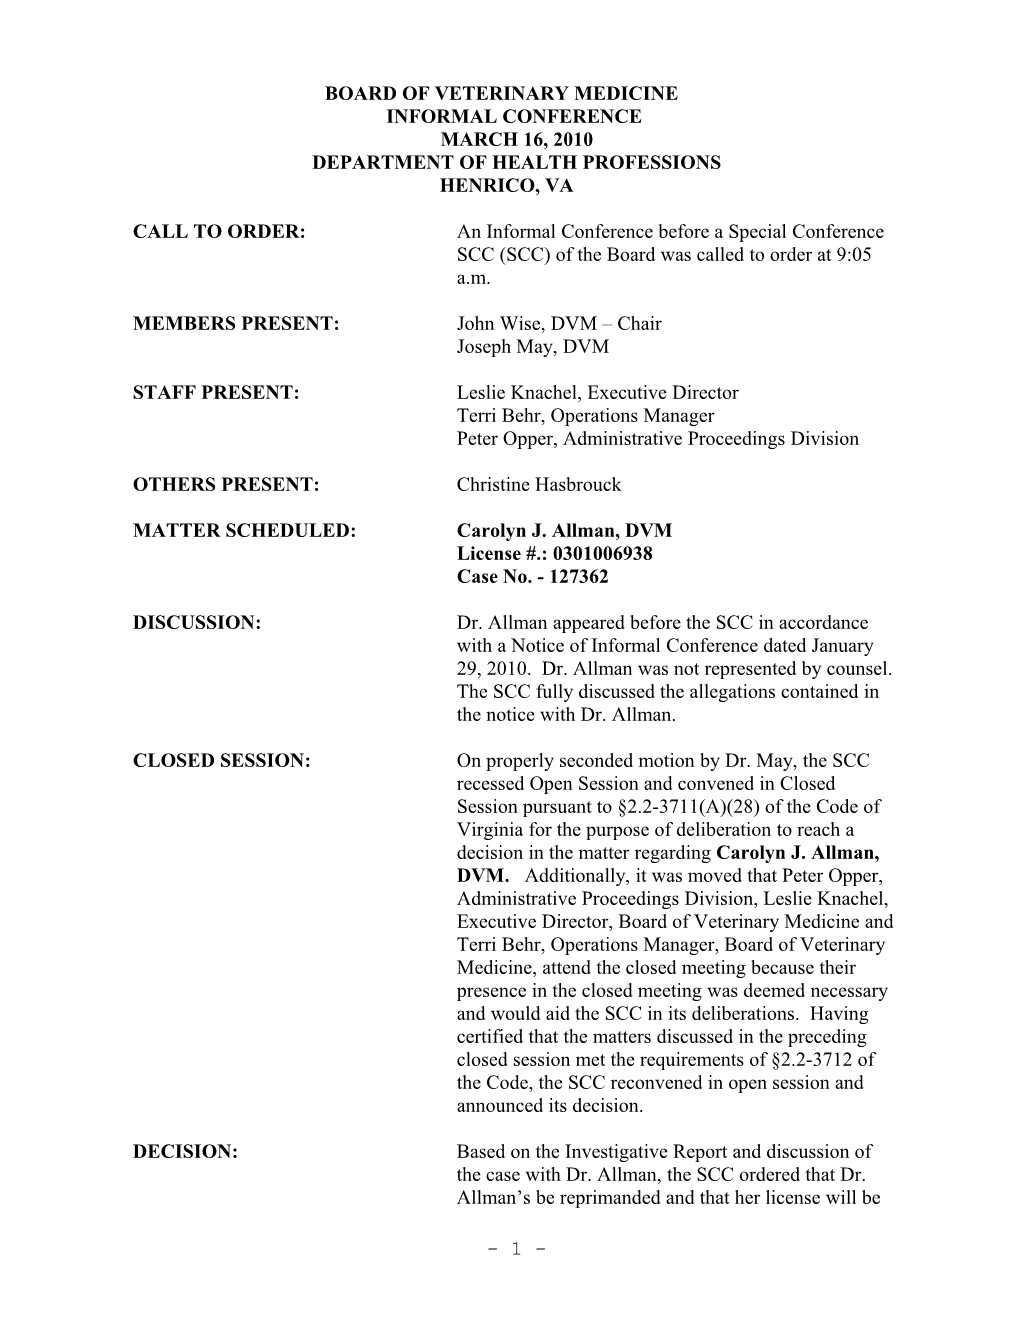 Board of Veterinary Medicine Minutes 03-16-2010